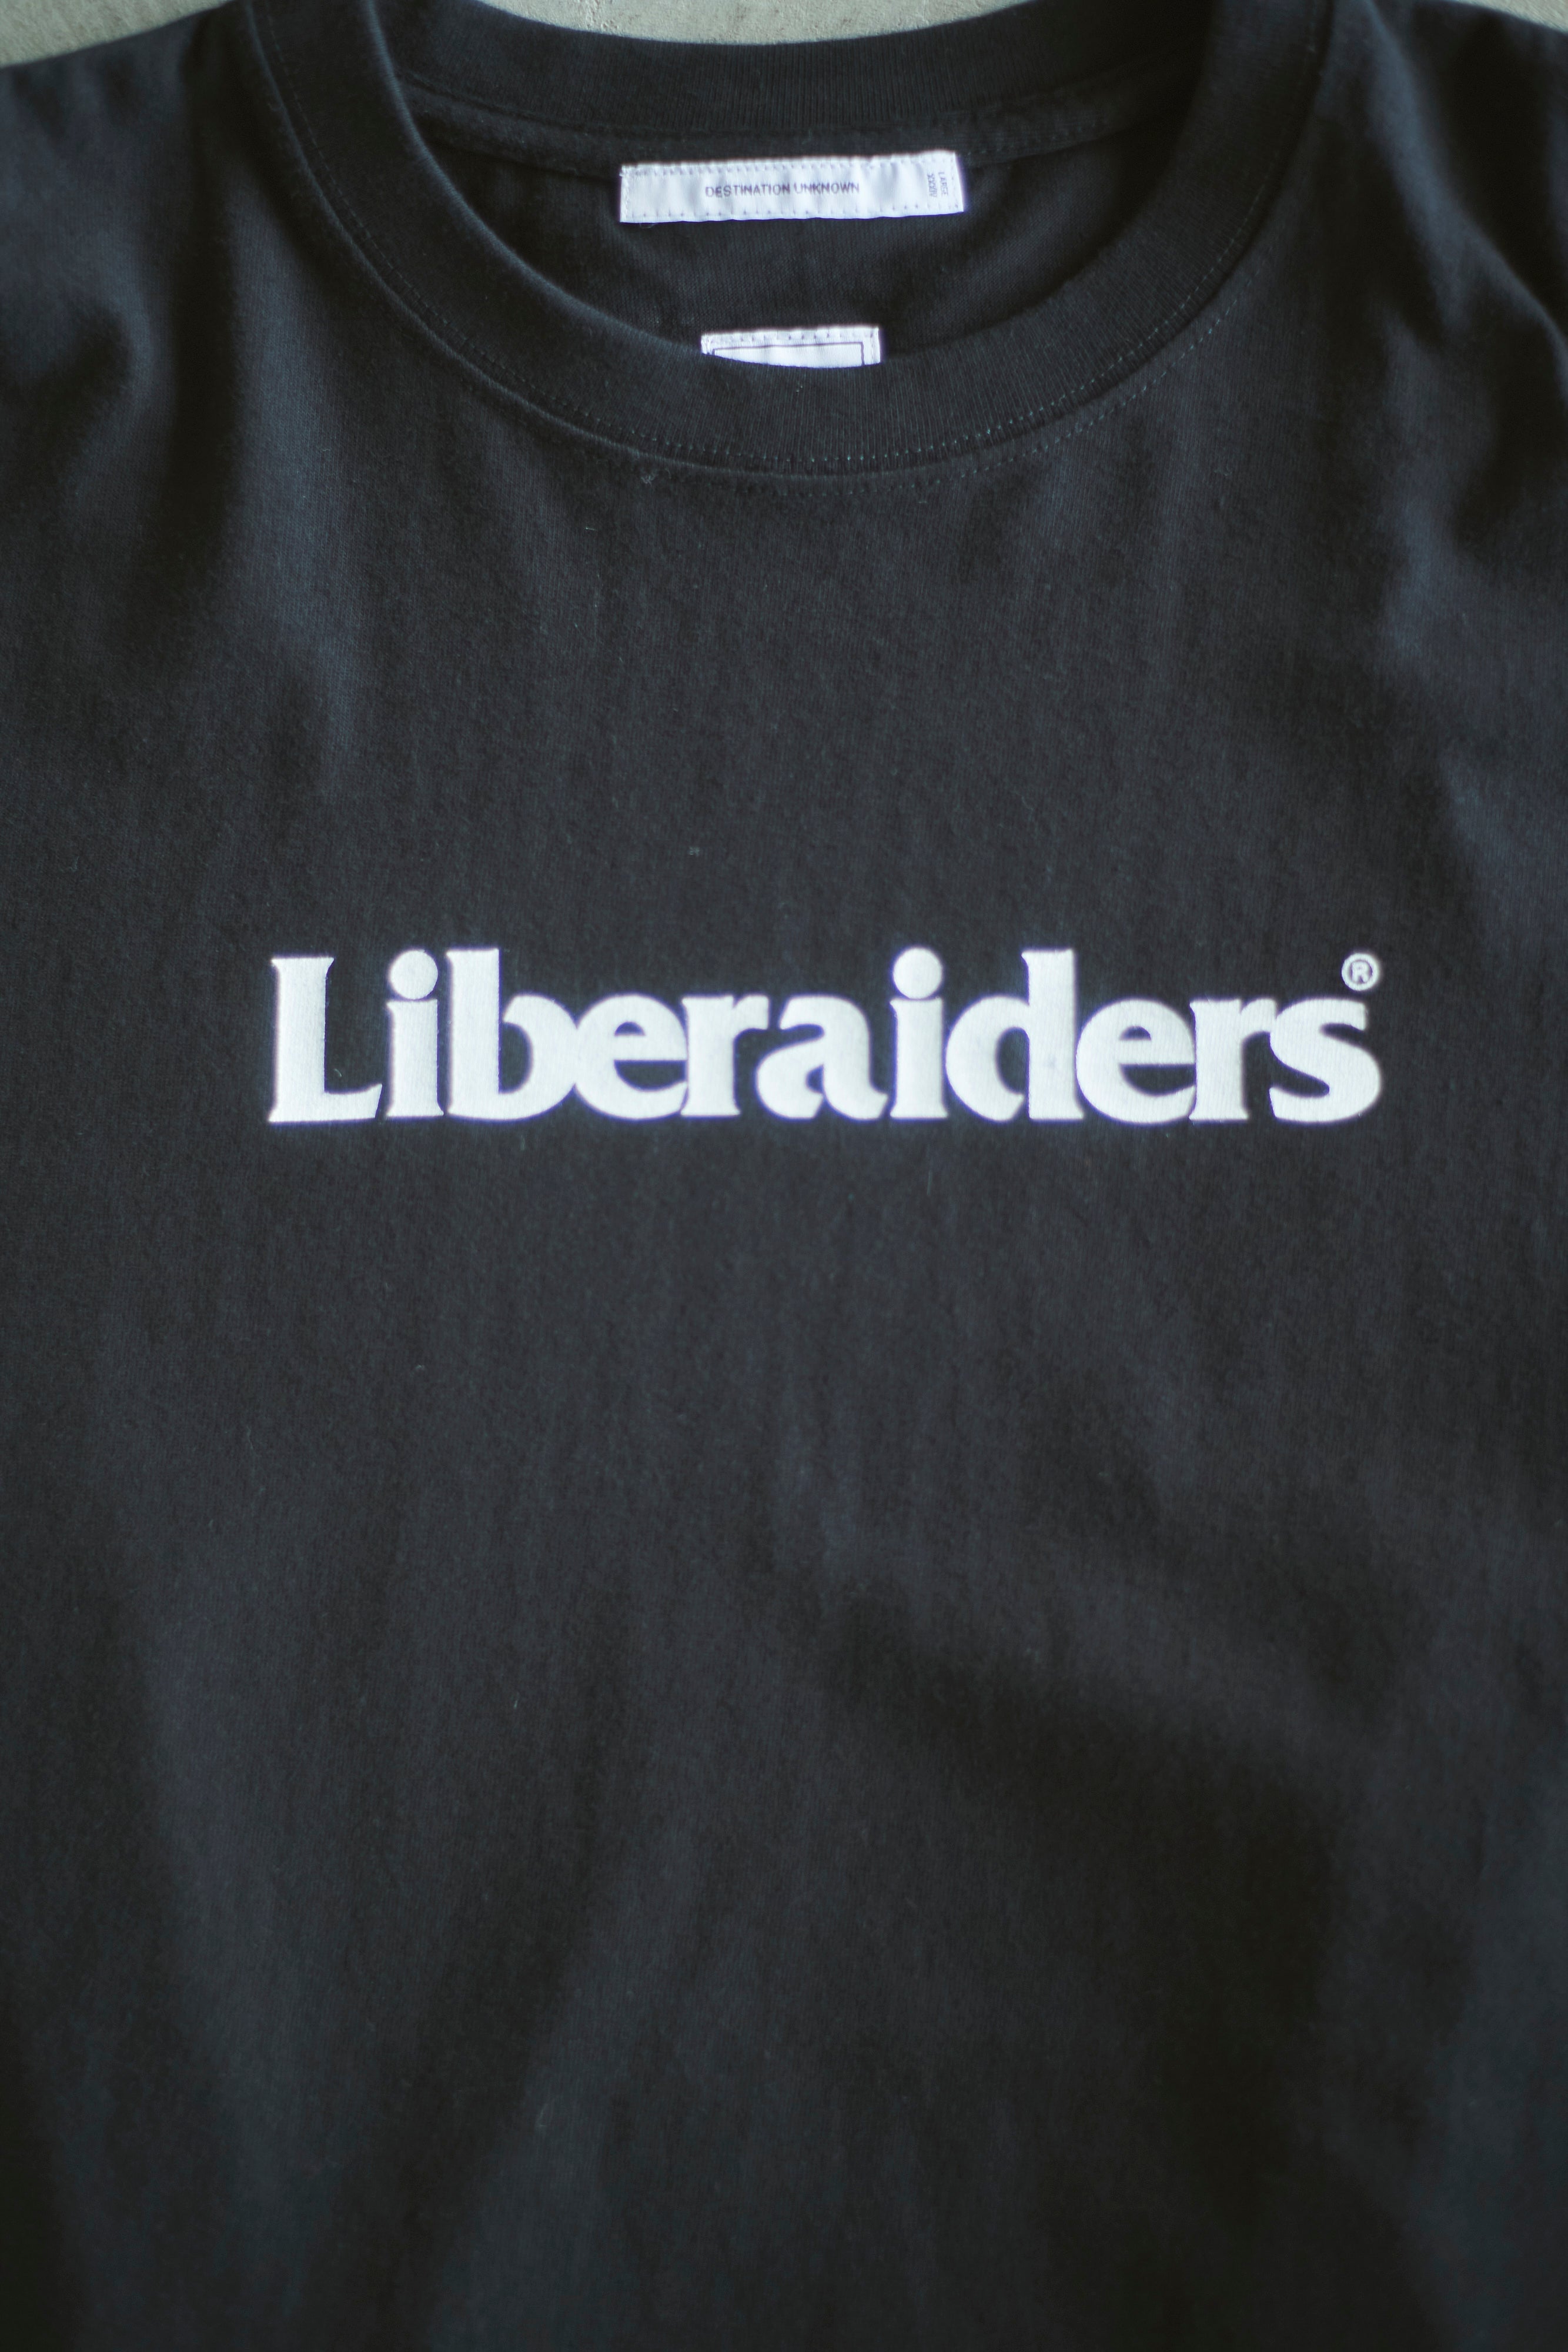 Liberaiders / OG LOGO TEE